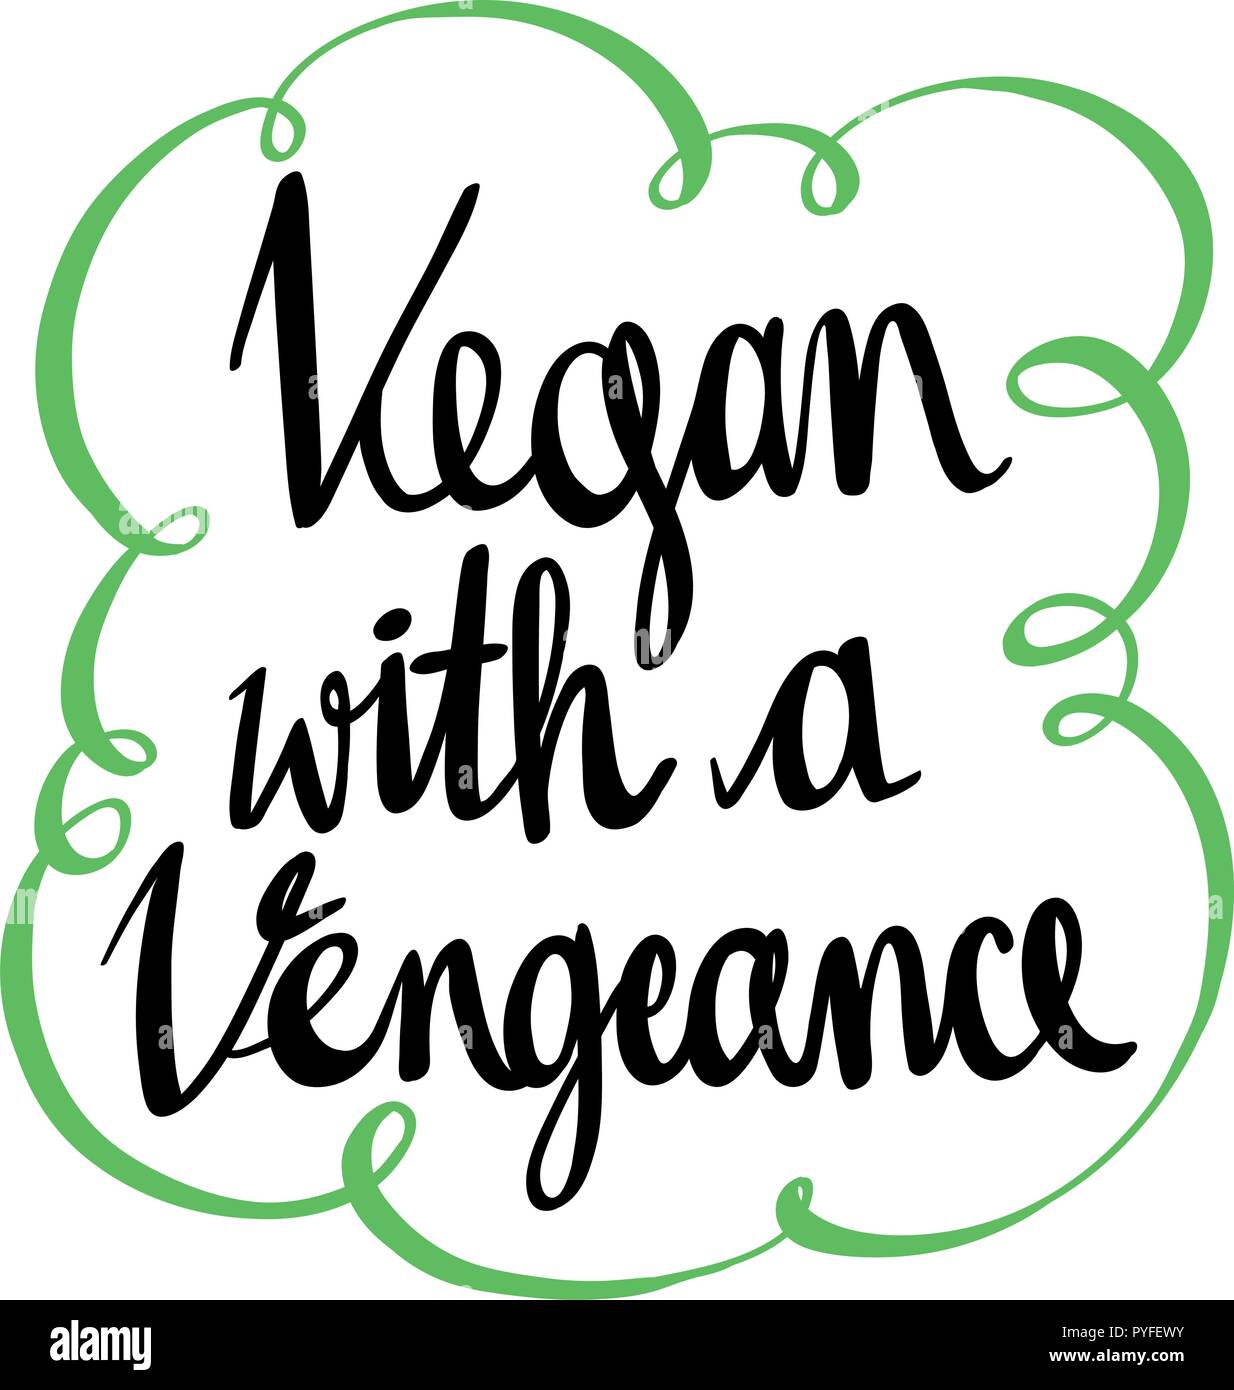 English phrase for vegan with vengeance illustration Stock Vector